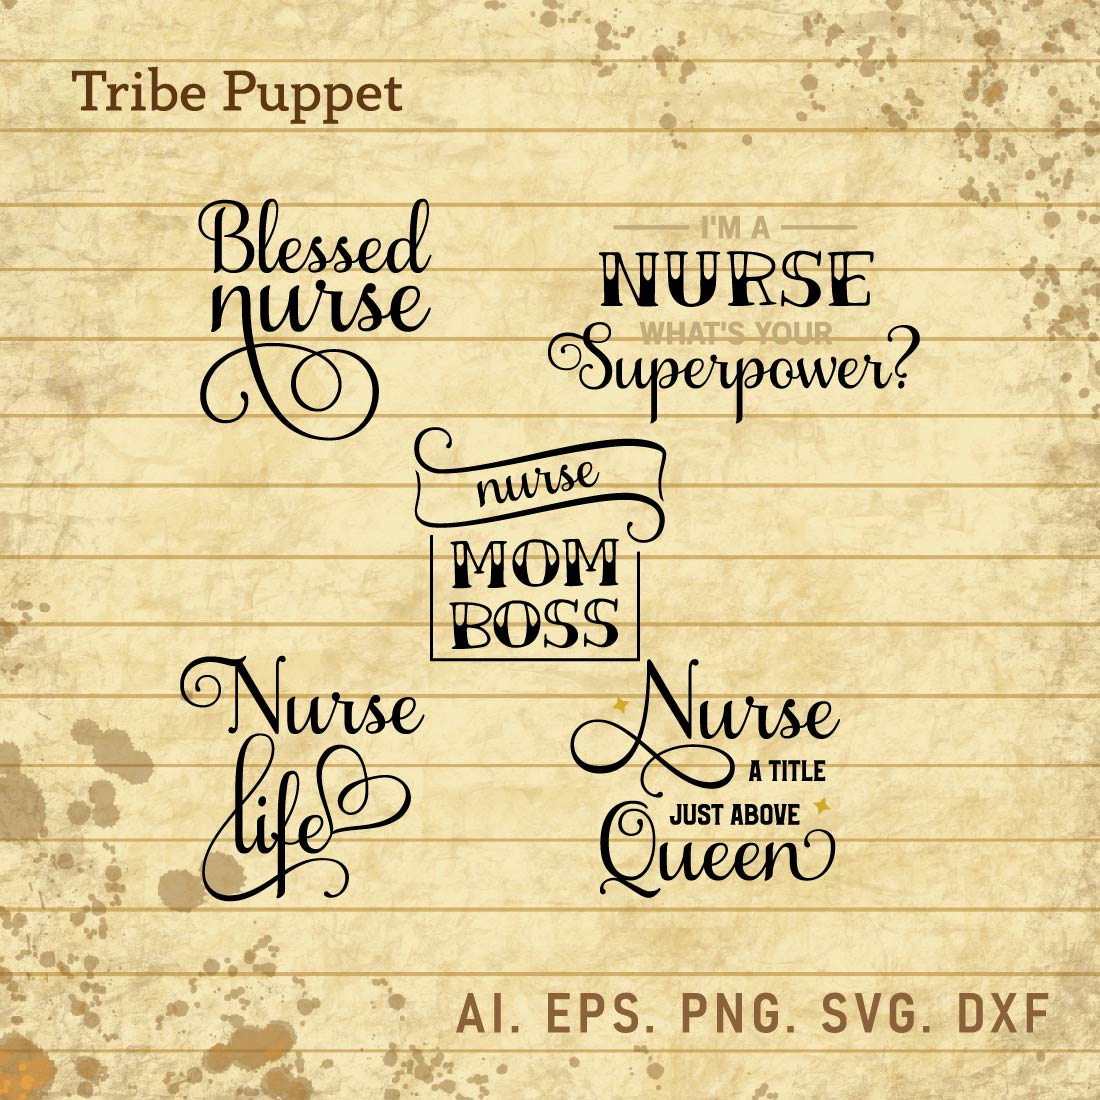 Nurse Typography cover image.